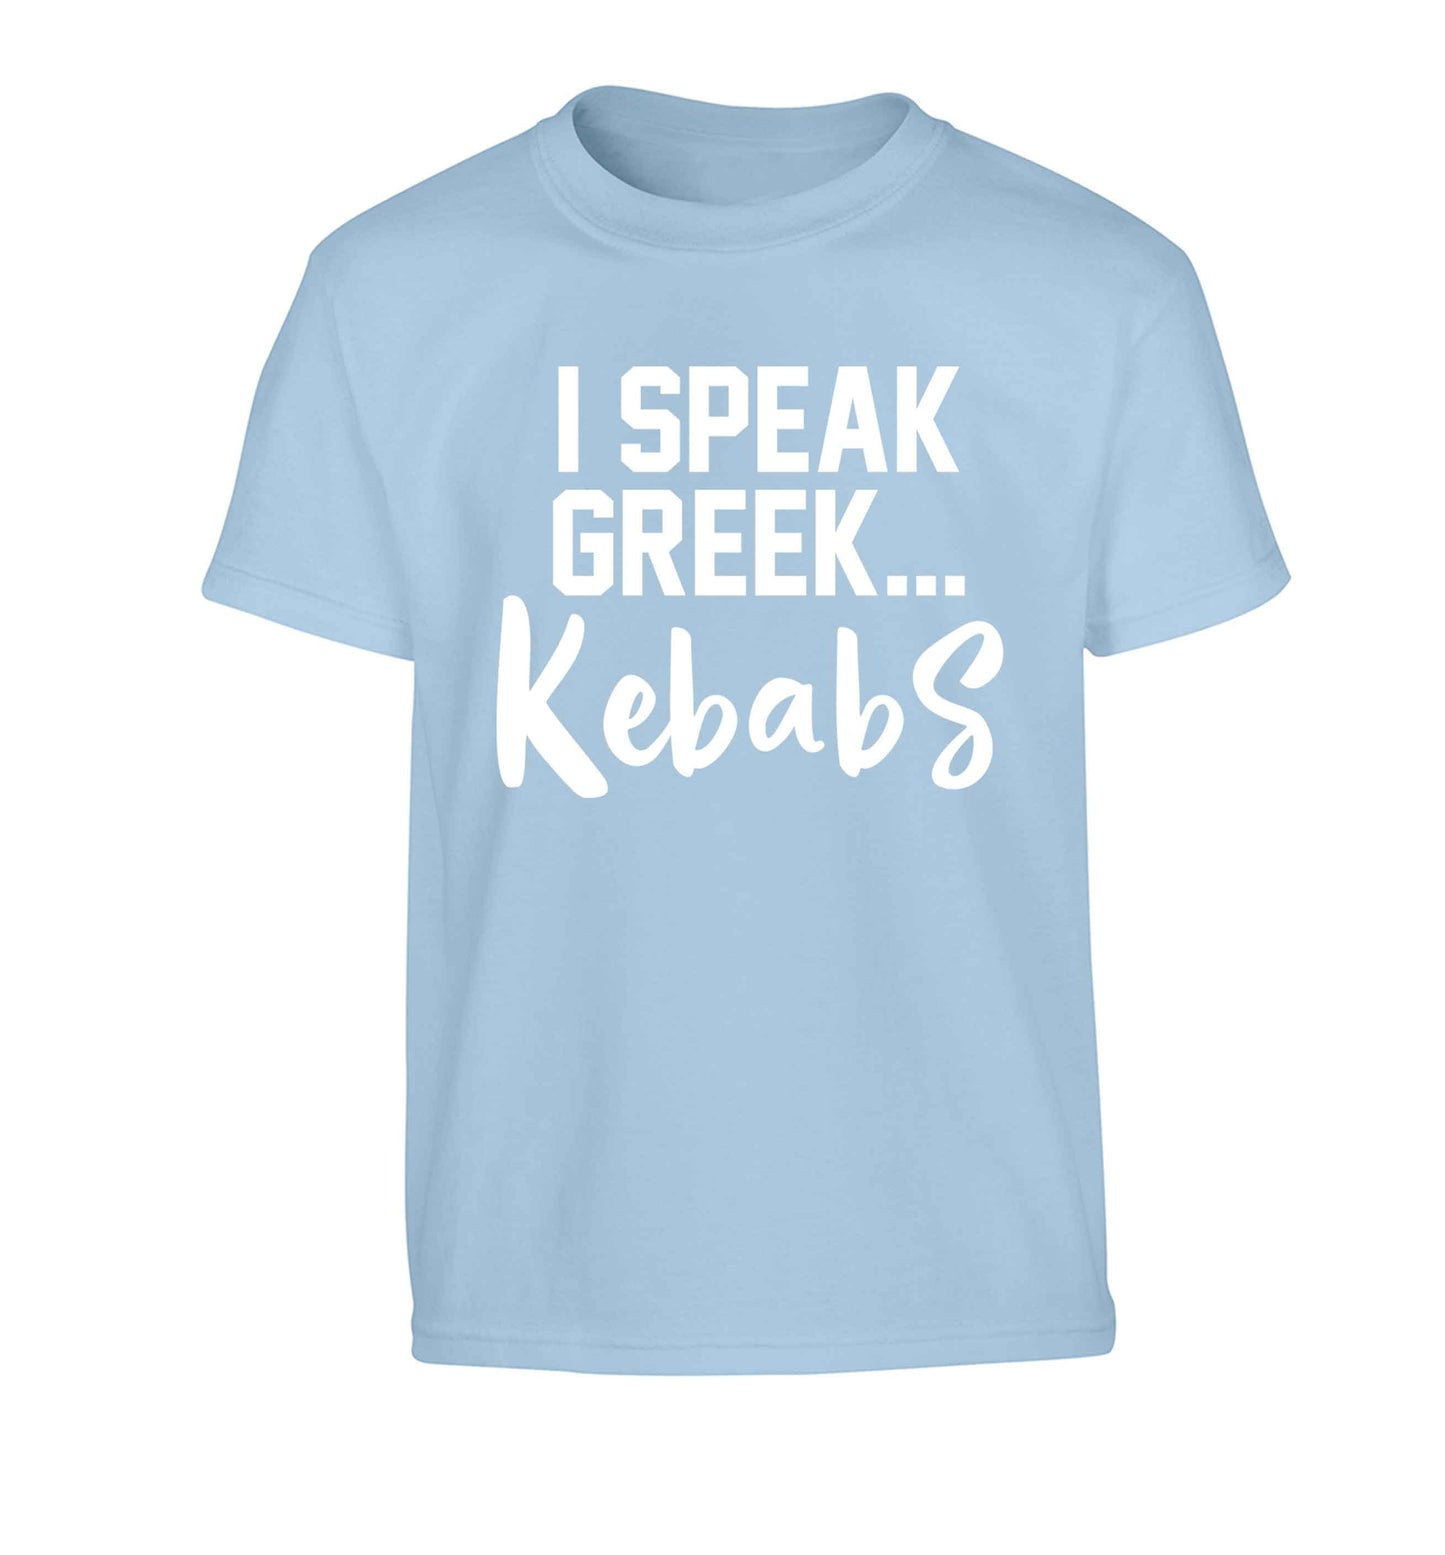 I speak Greek...kebabs Children's light blue Tshirt 12-13 Years